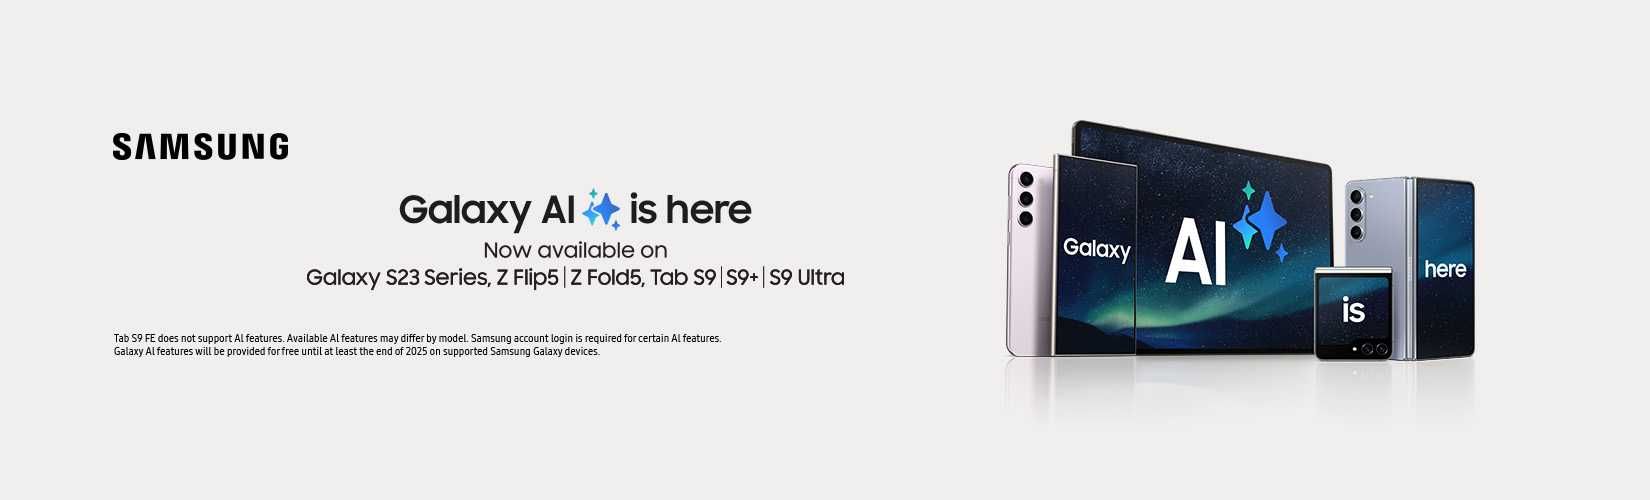 Samsung. Galaxy AI is hear. Now available on Galaxy S23 series, Z Flip5, Z Fold5, Tab S9, S9+, S9 Ultra.